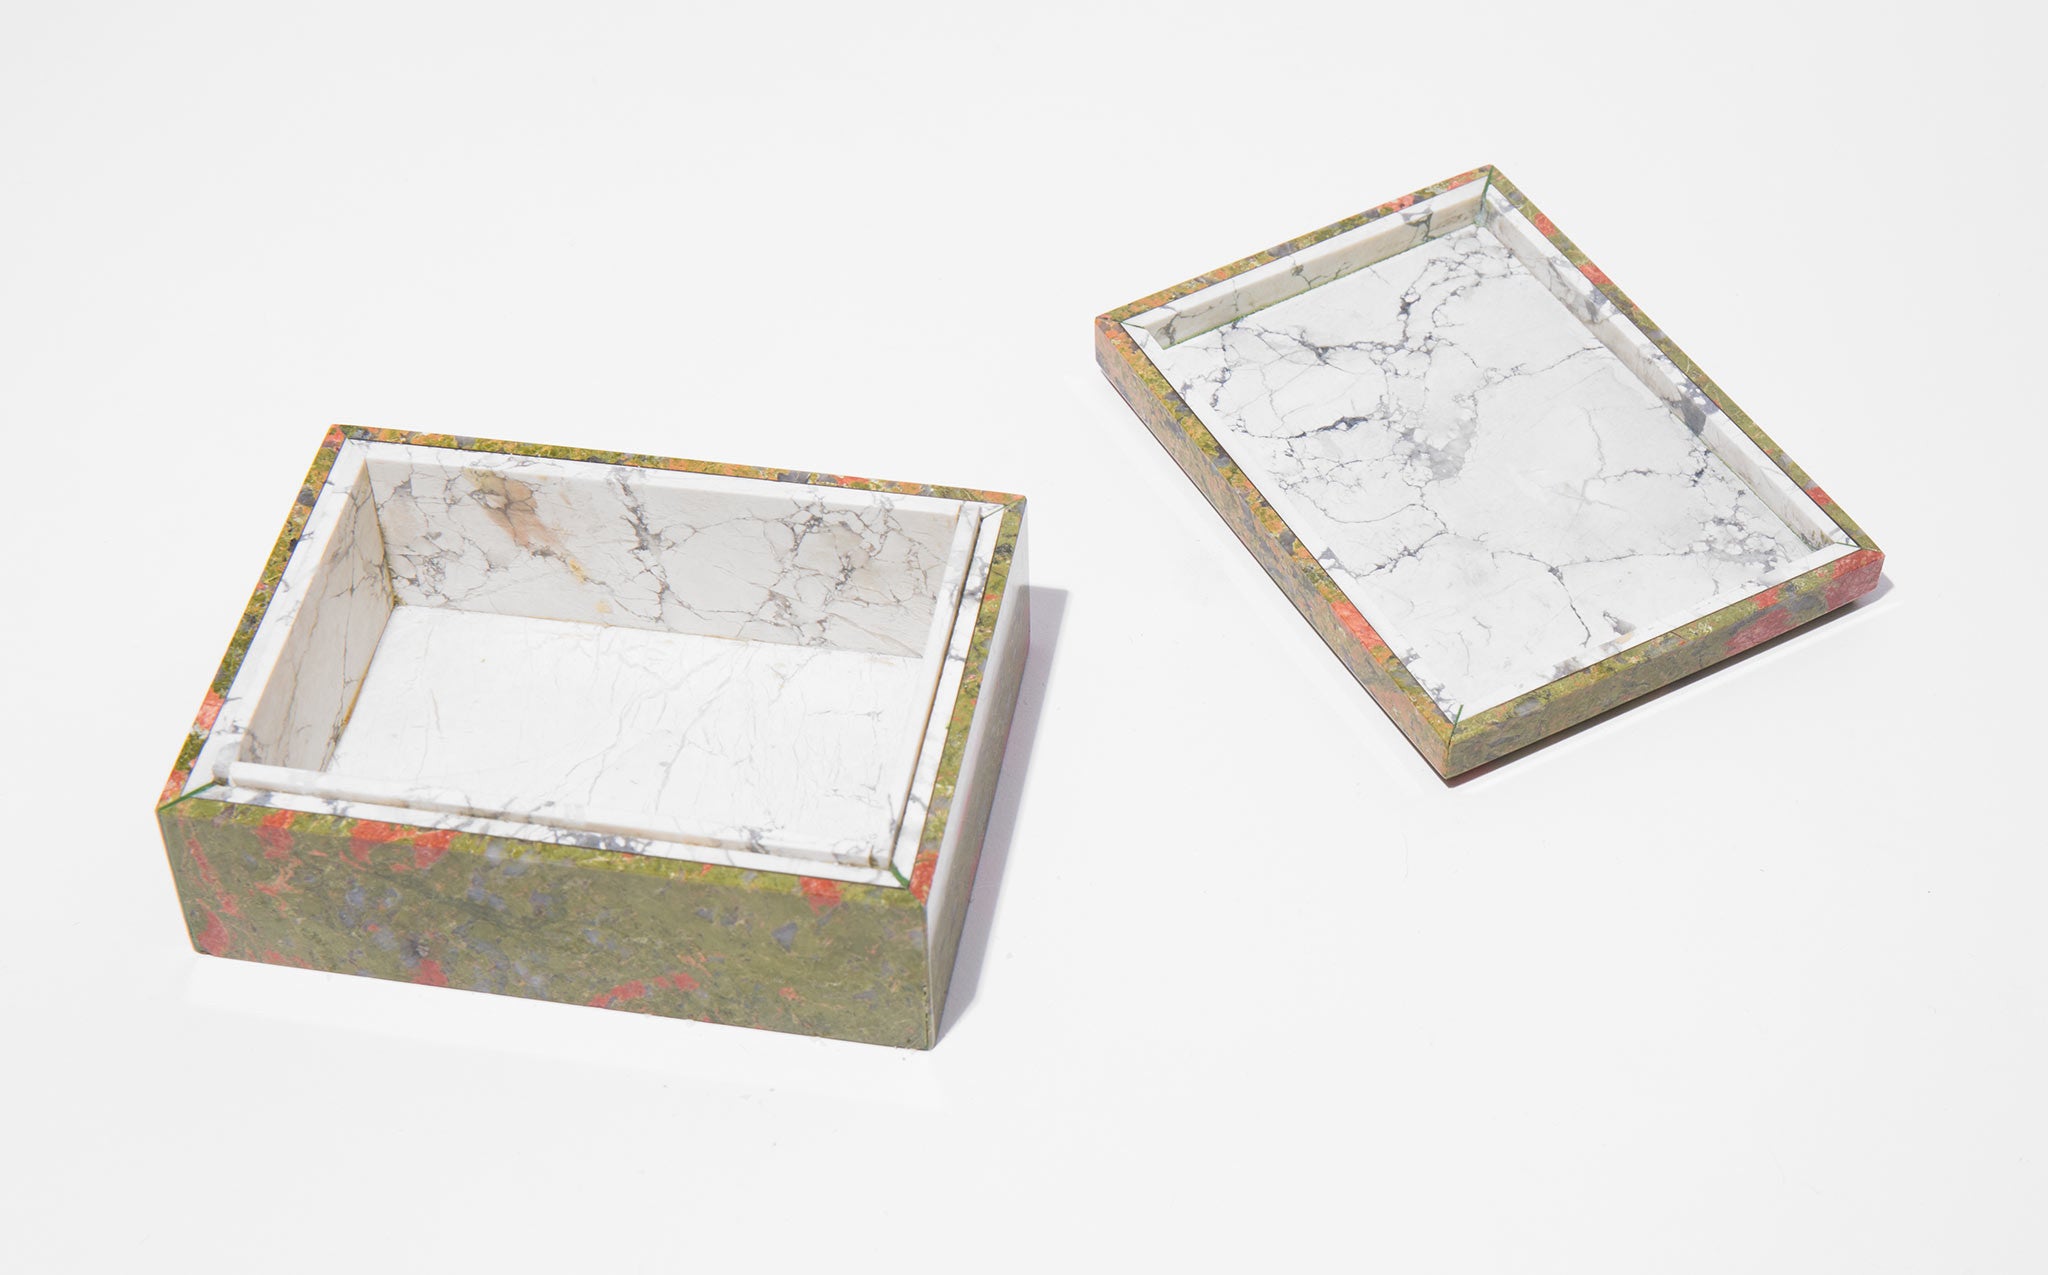 Two-Tone Stone Trinket Box